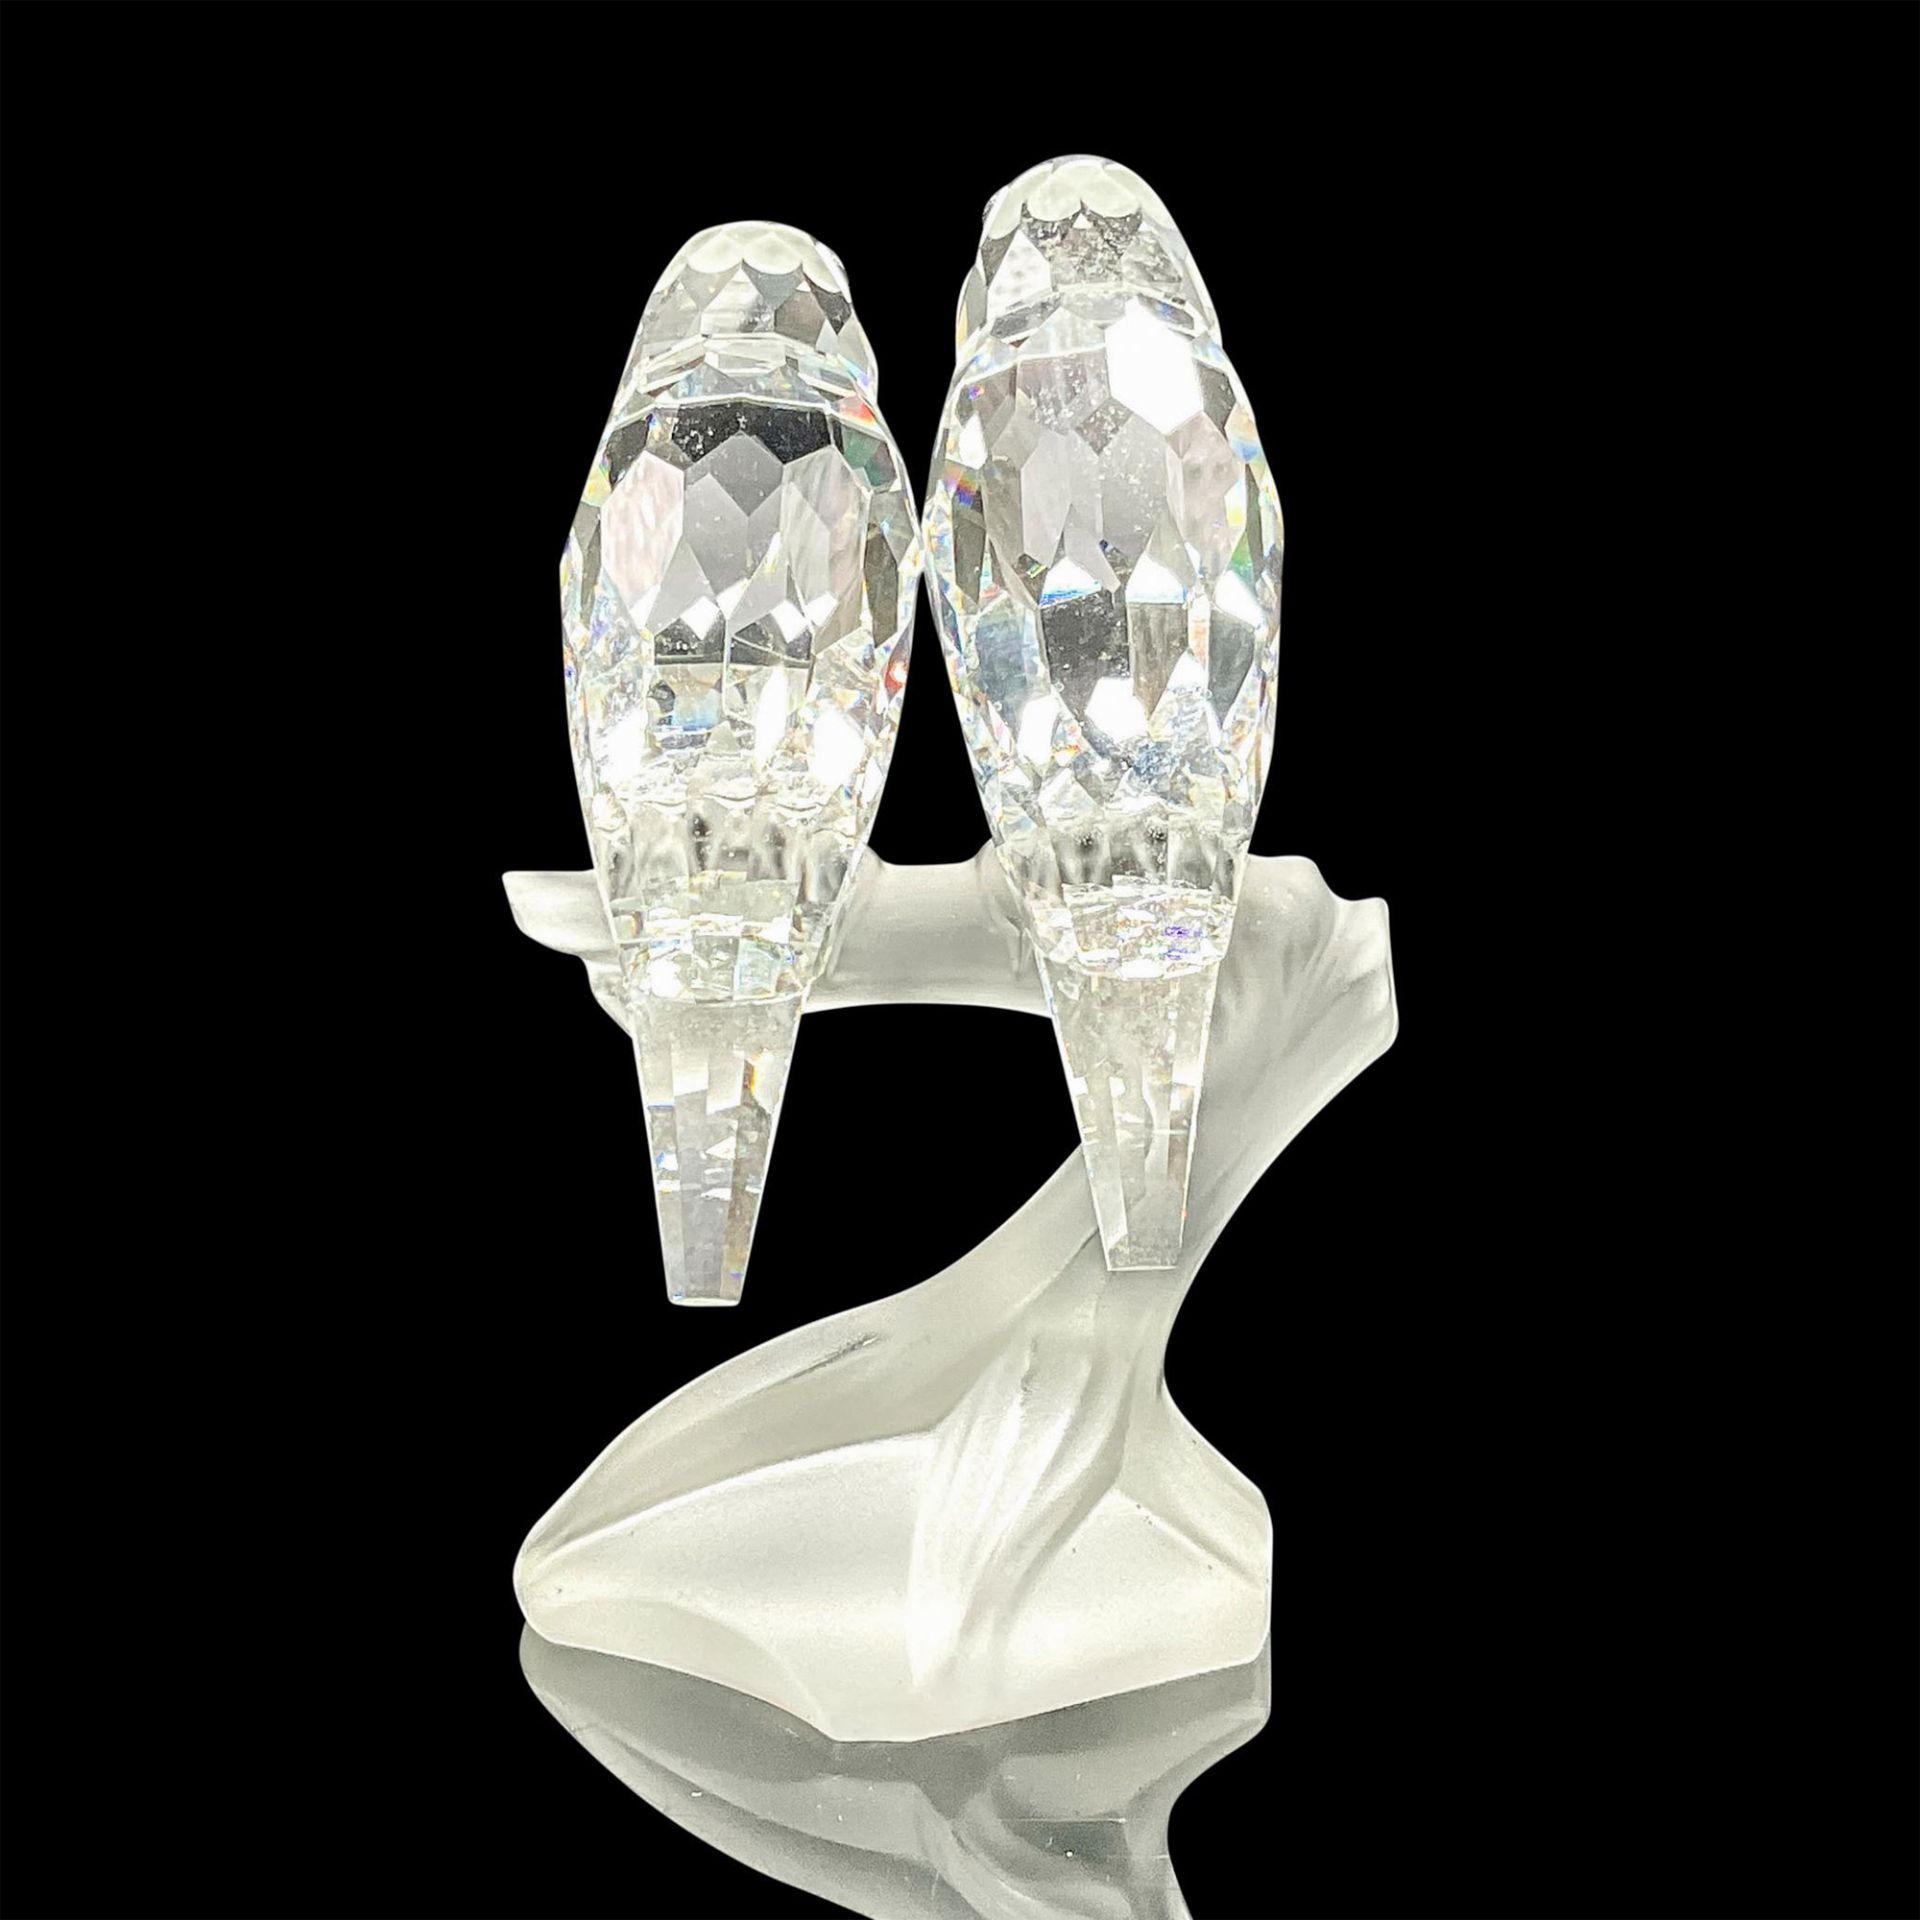 Swarovski Crystal Figurine, Lovebirds Together - Image 2 of 3